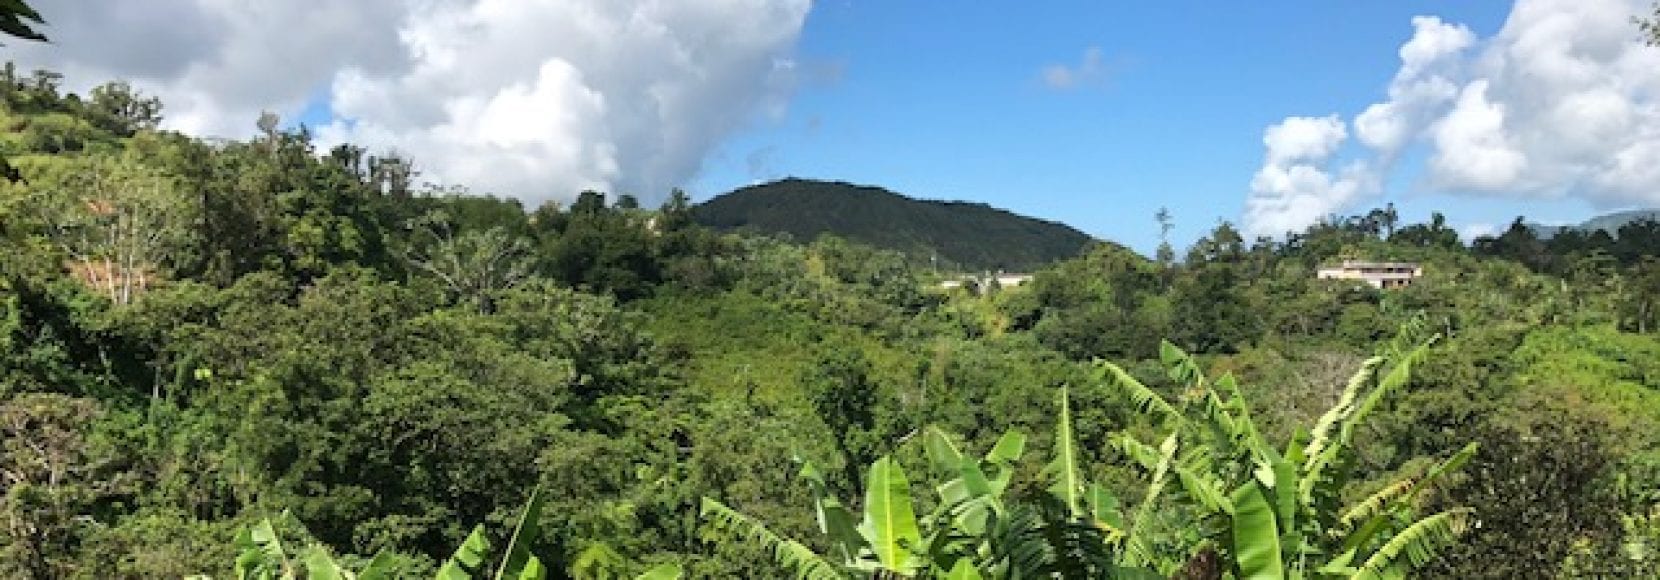 A landscape in Puerto Rico